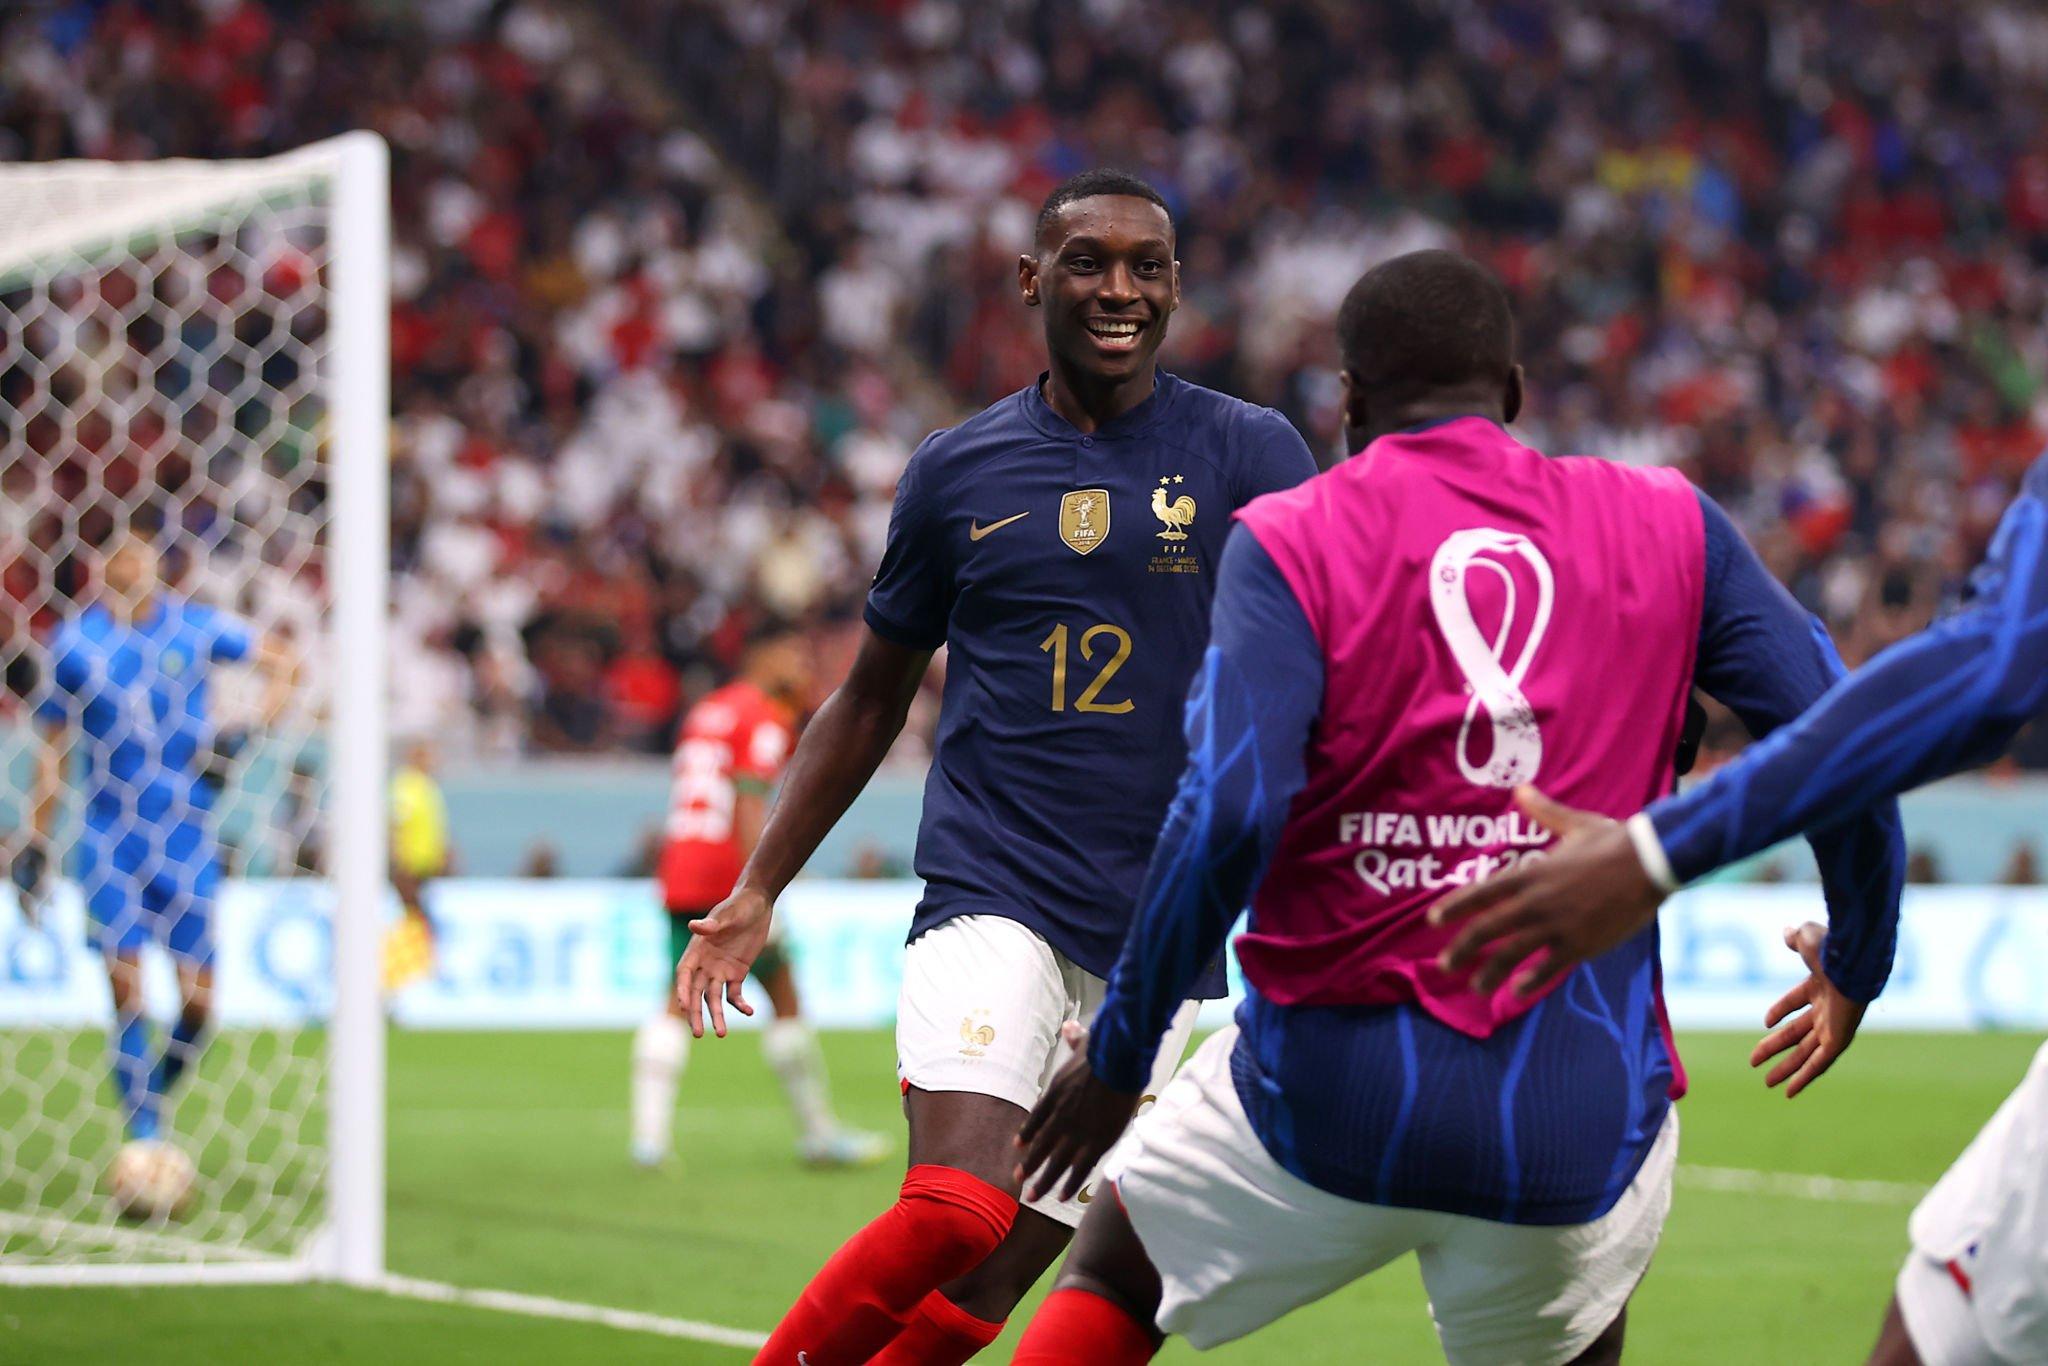 سجل راندال كولو مواني الهدف الثاني لفرنسا بعد ثوان فقط من دخوله